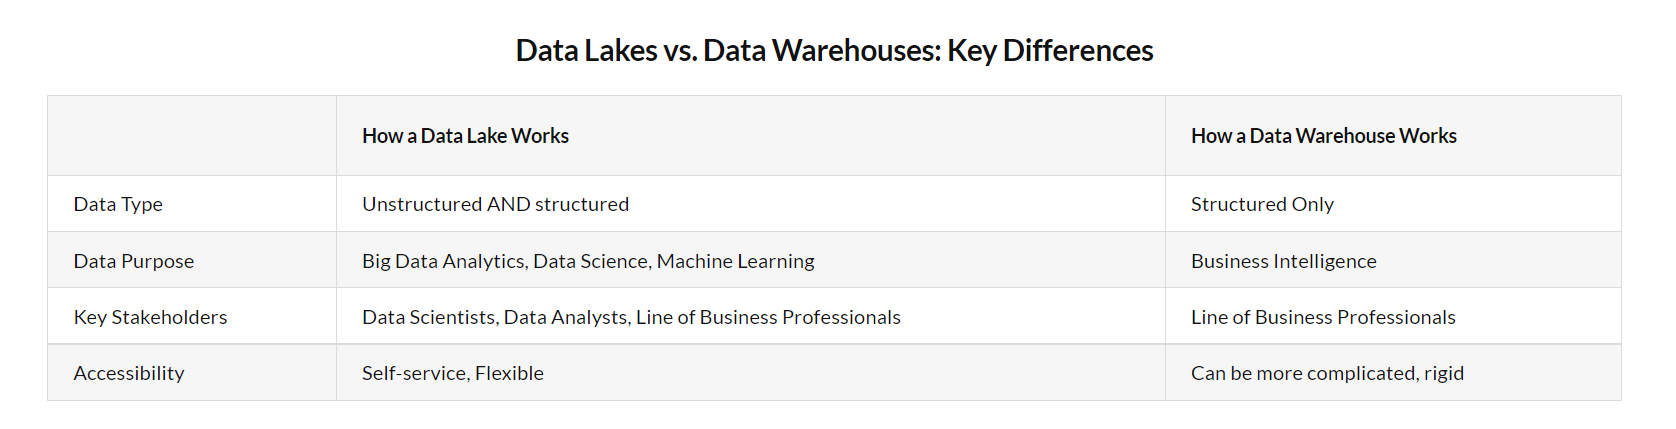 Data Lakes Vs. Data Warehouses: Key Differences